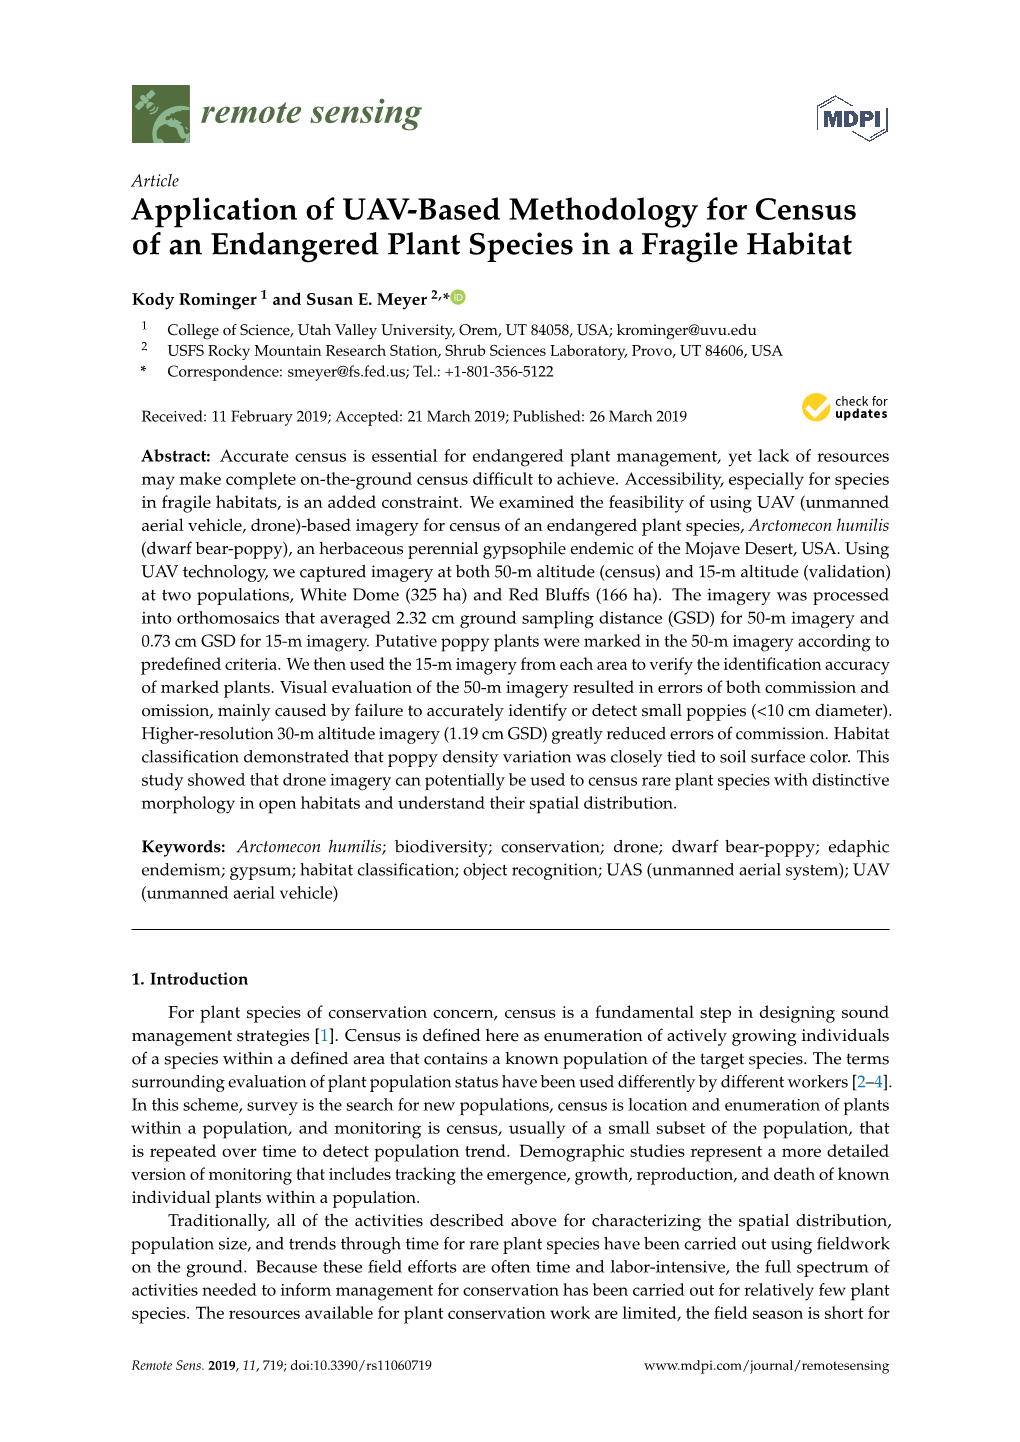 Application of UAV-Based Methodology for Census of an Endangered Plant Species in a Fragile Habitat